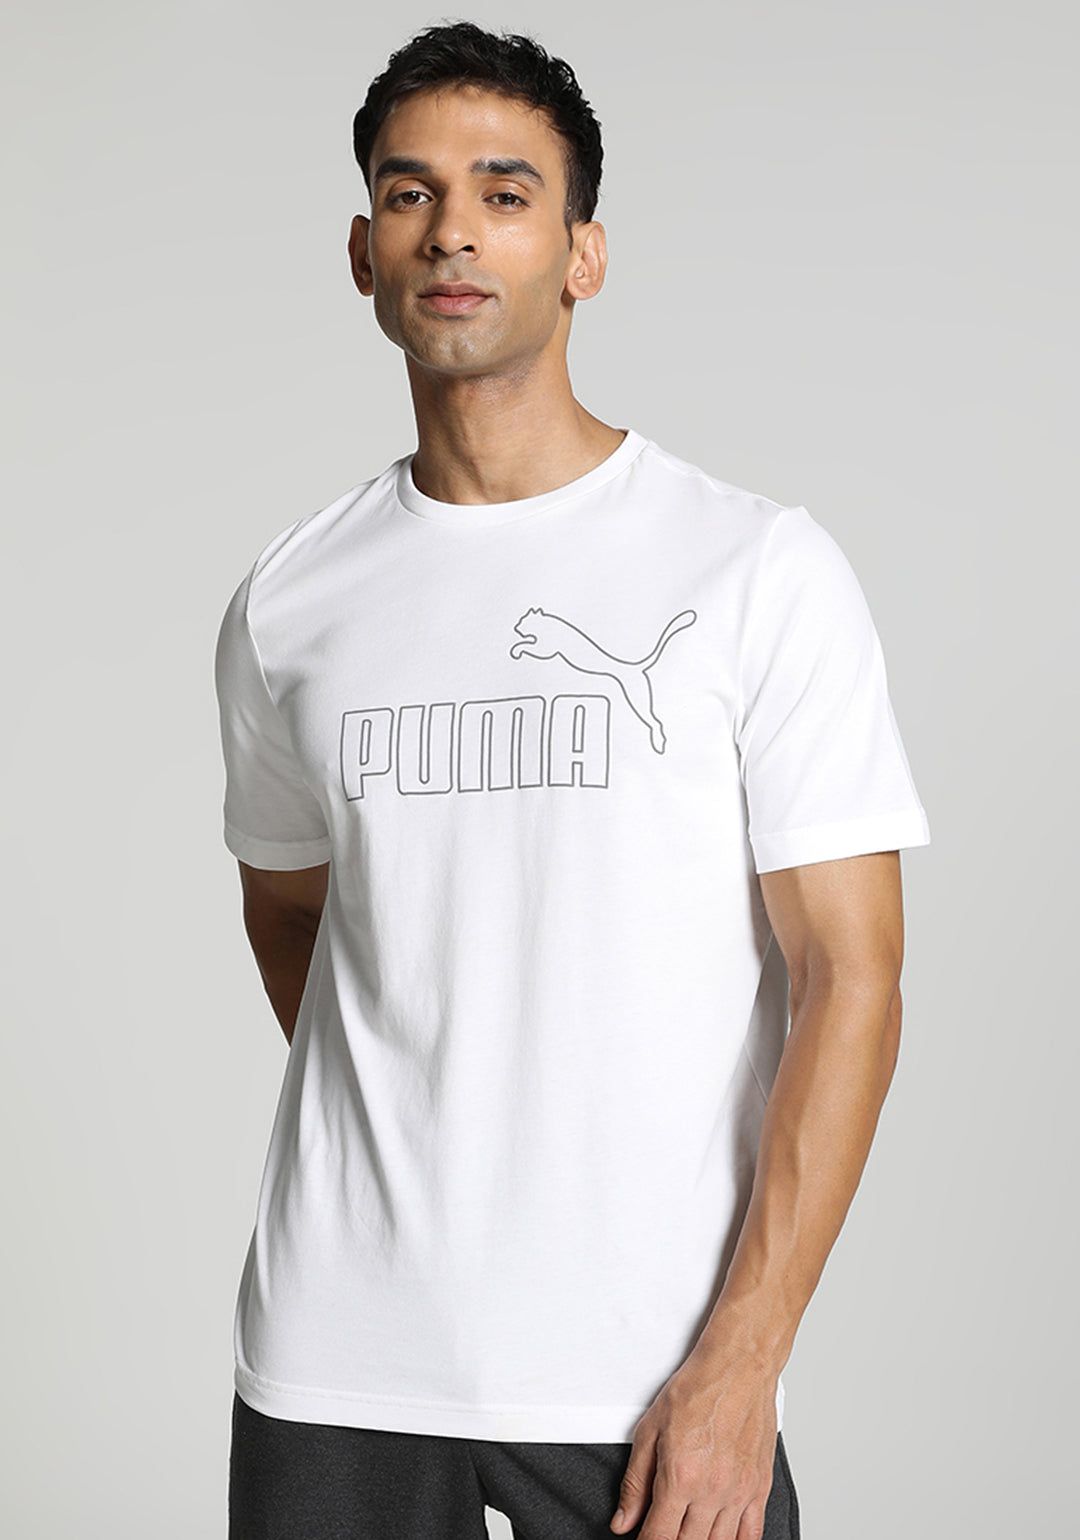 T-Shirts Merchandise: Buy Official T-Shirts Jerseys & T Shirts Online | shop